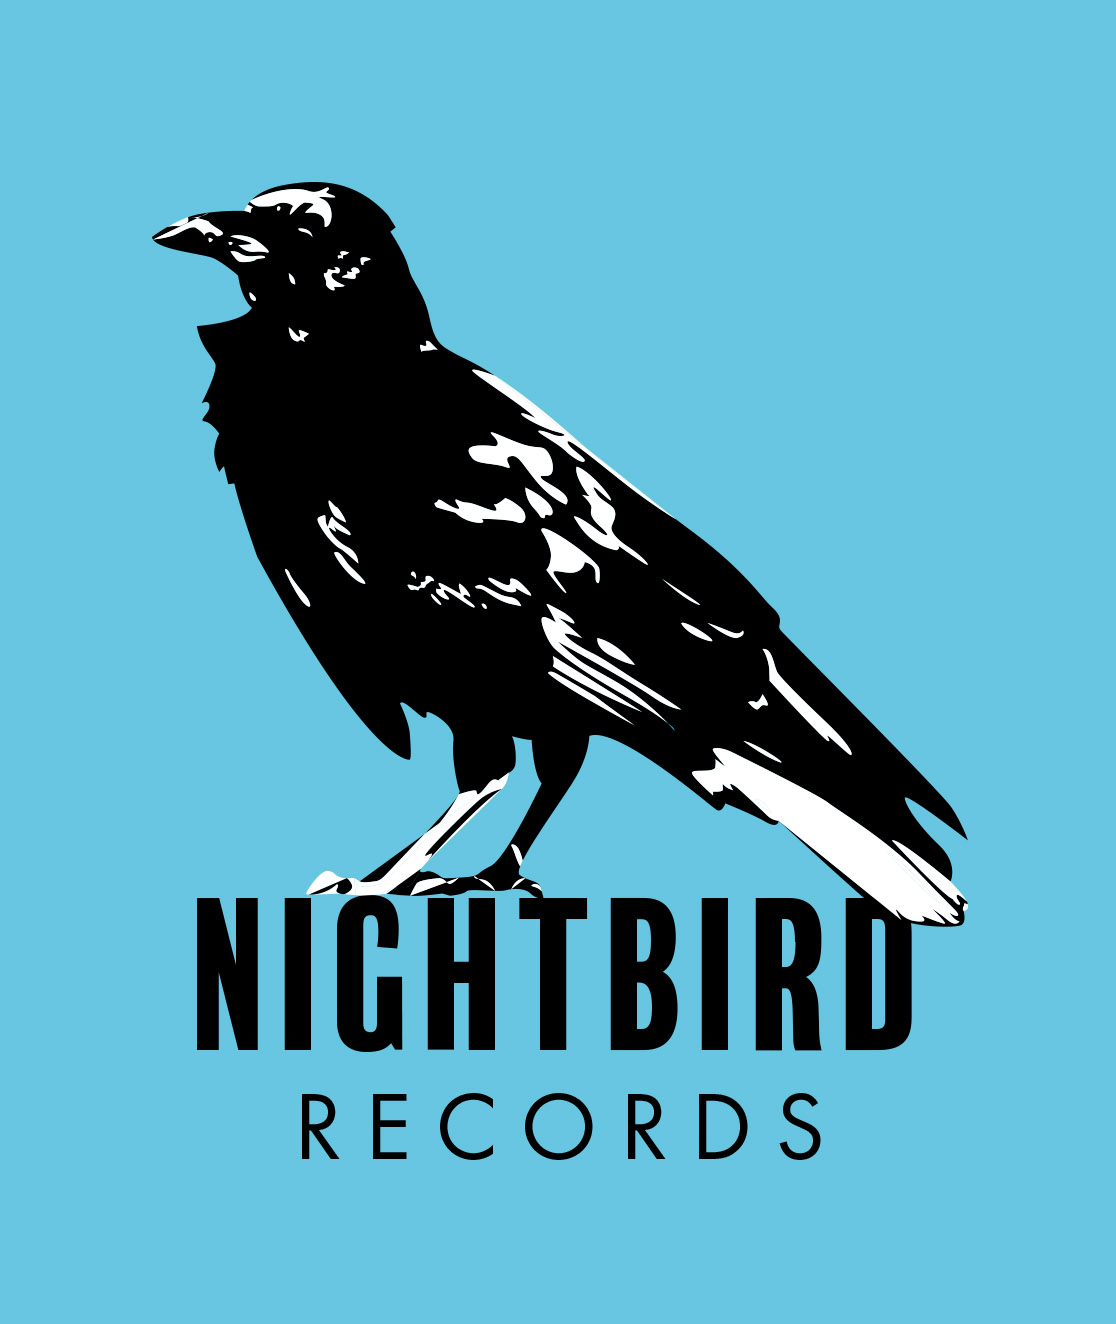 Entrevista: Nightbird Records